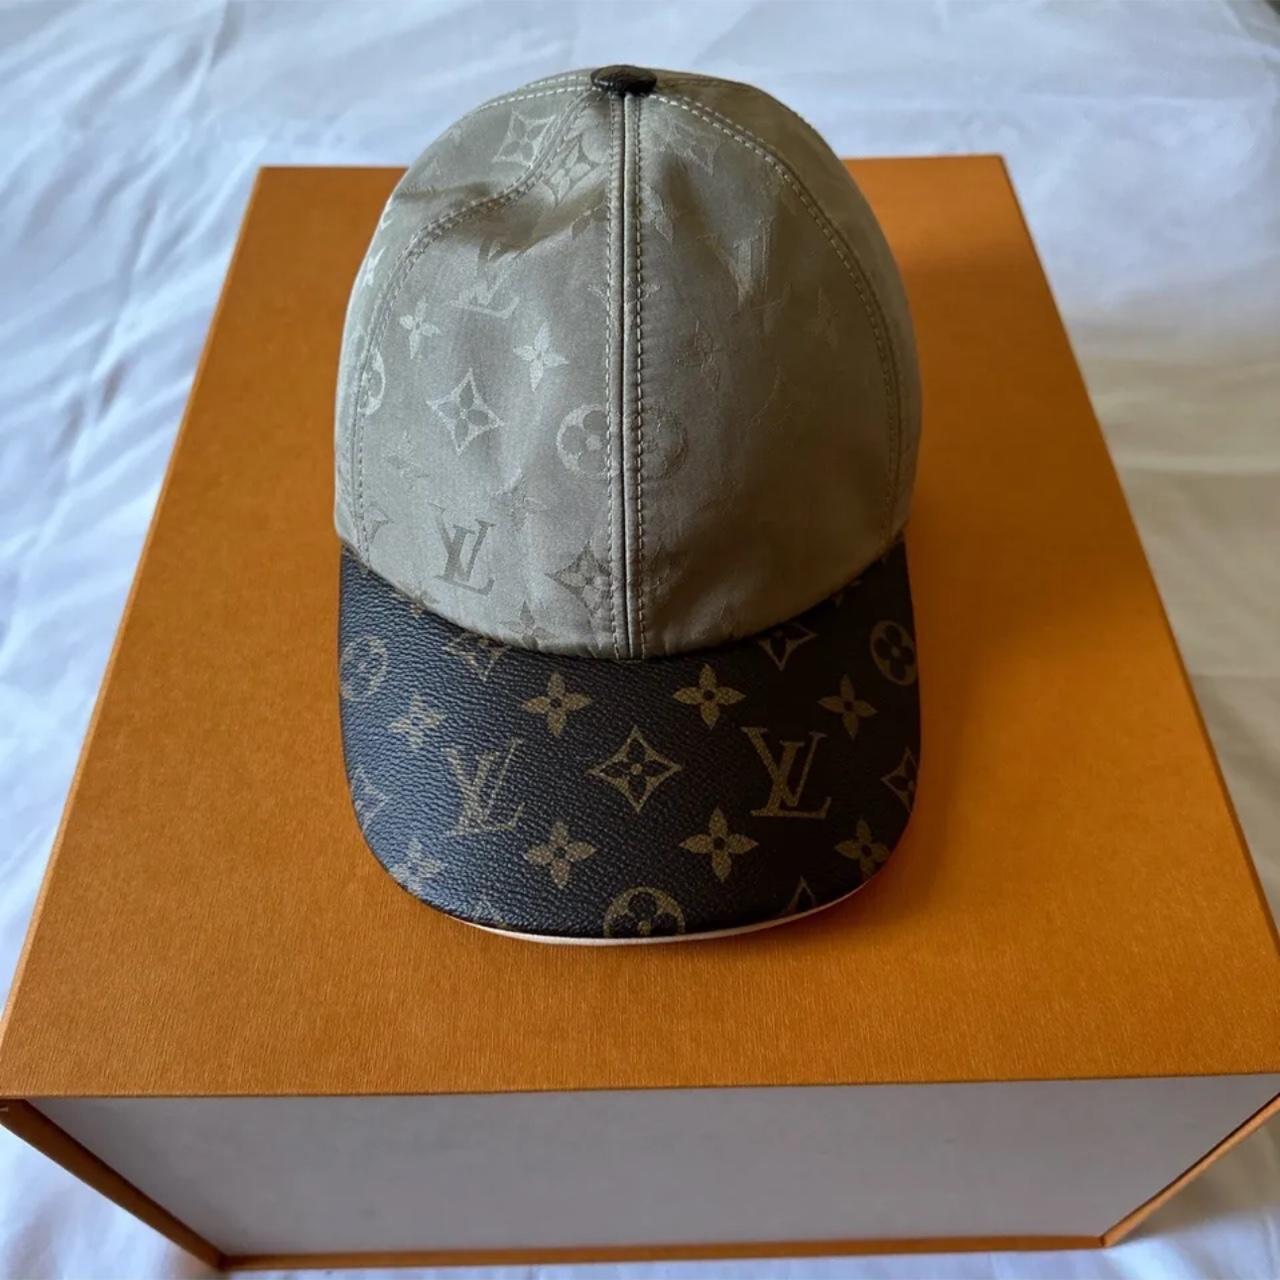 Louis Vuitton Petit Damier Hat (Charcoal) , New with